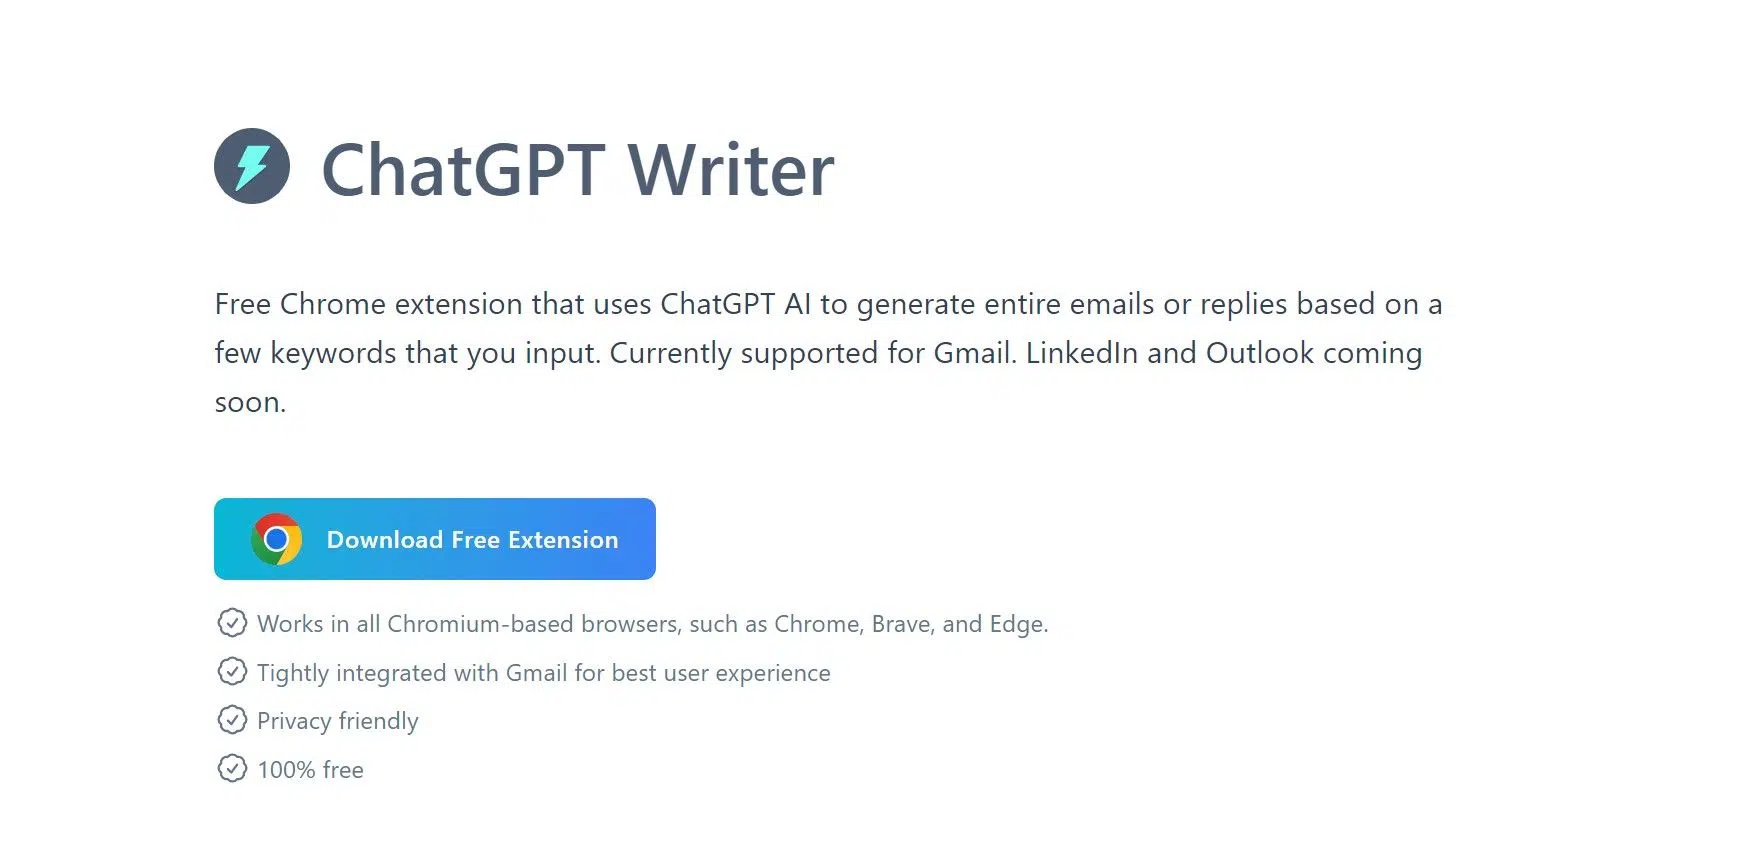 ChatGPT Writerwebsite picture